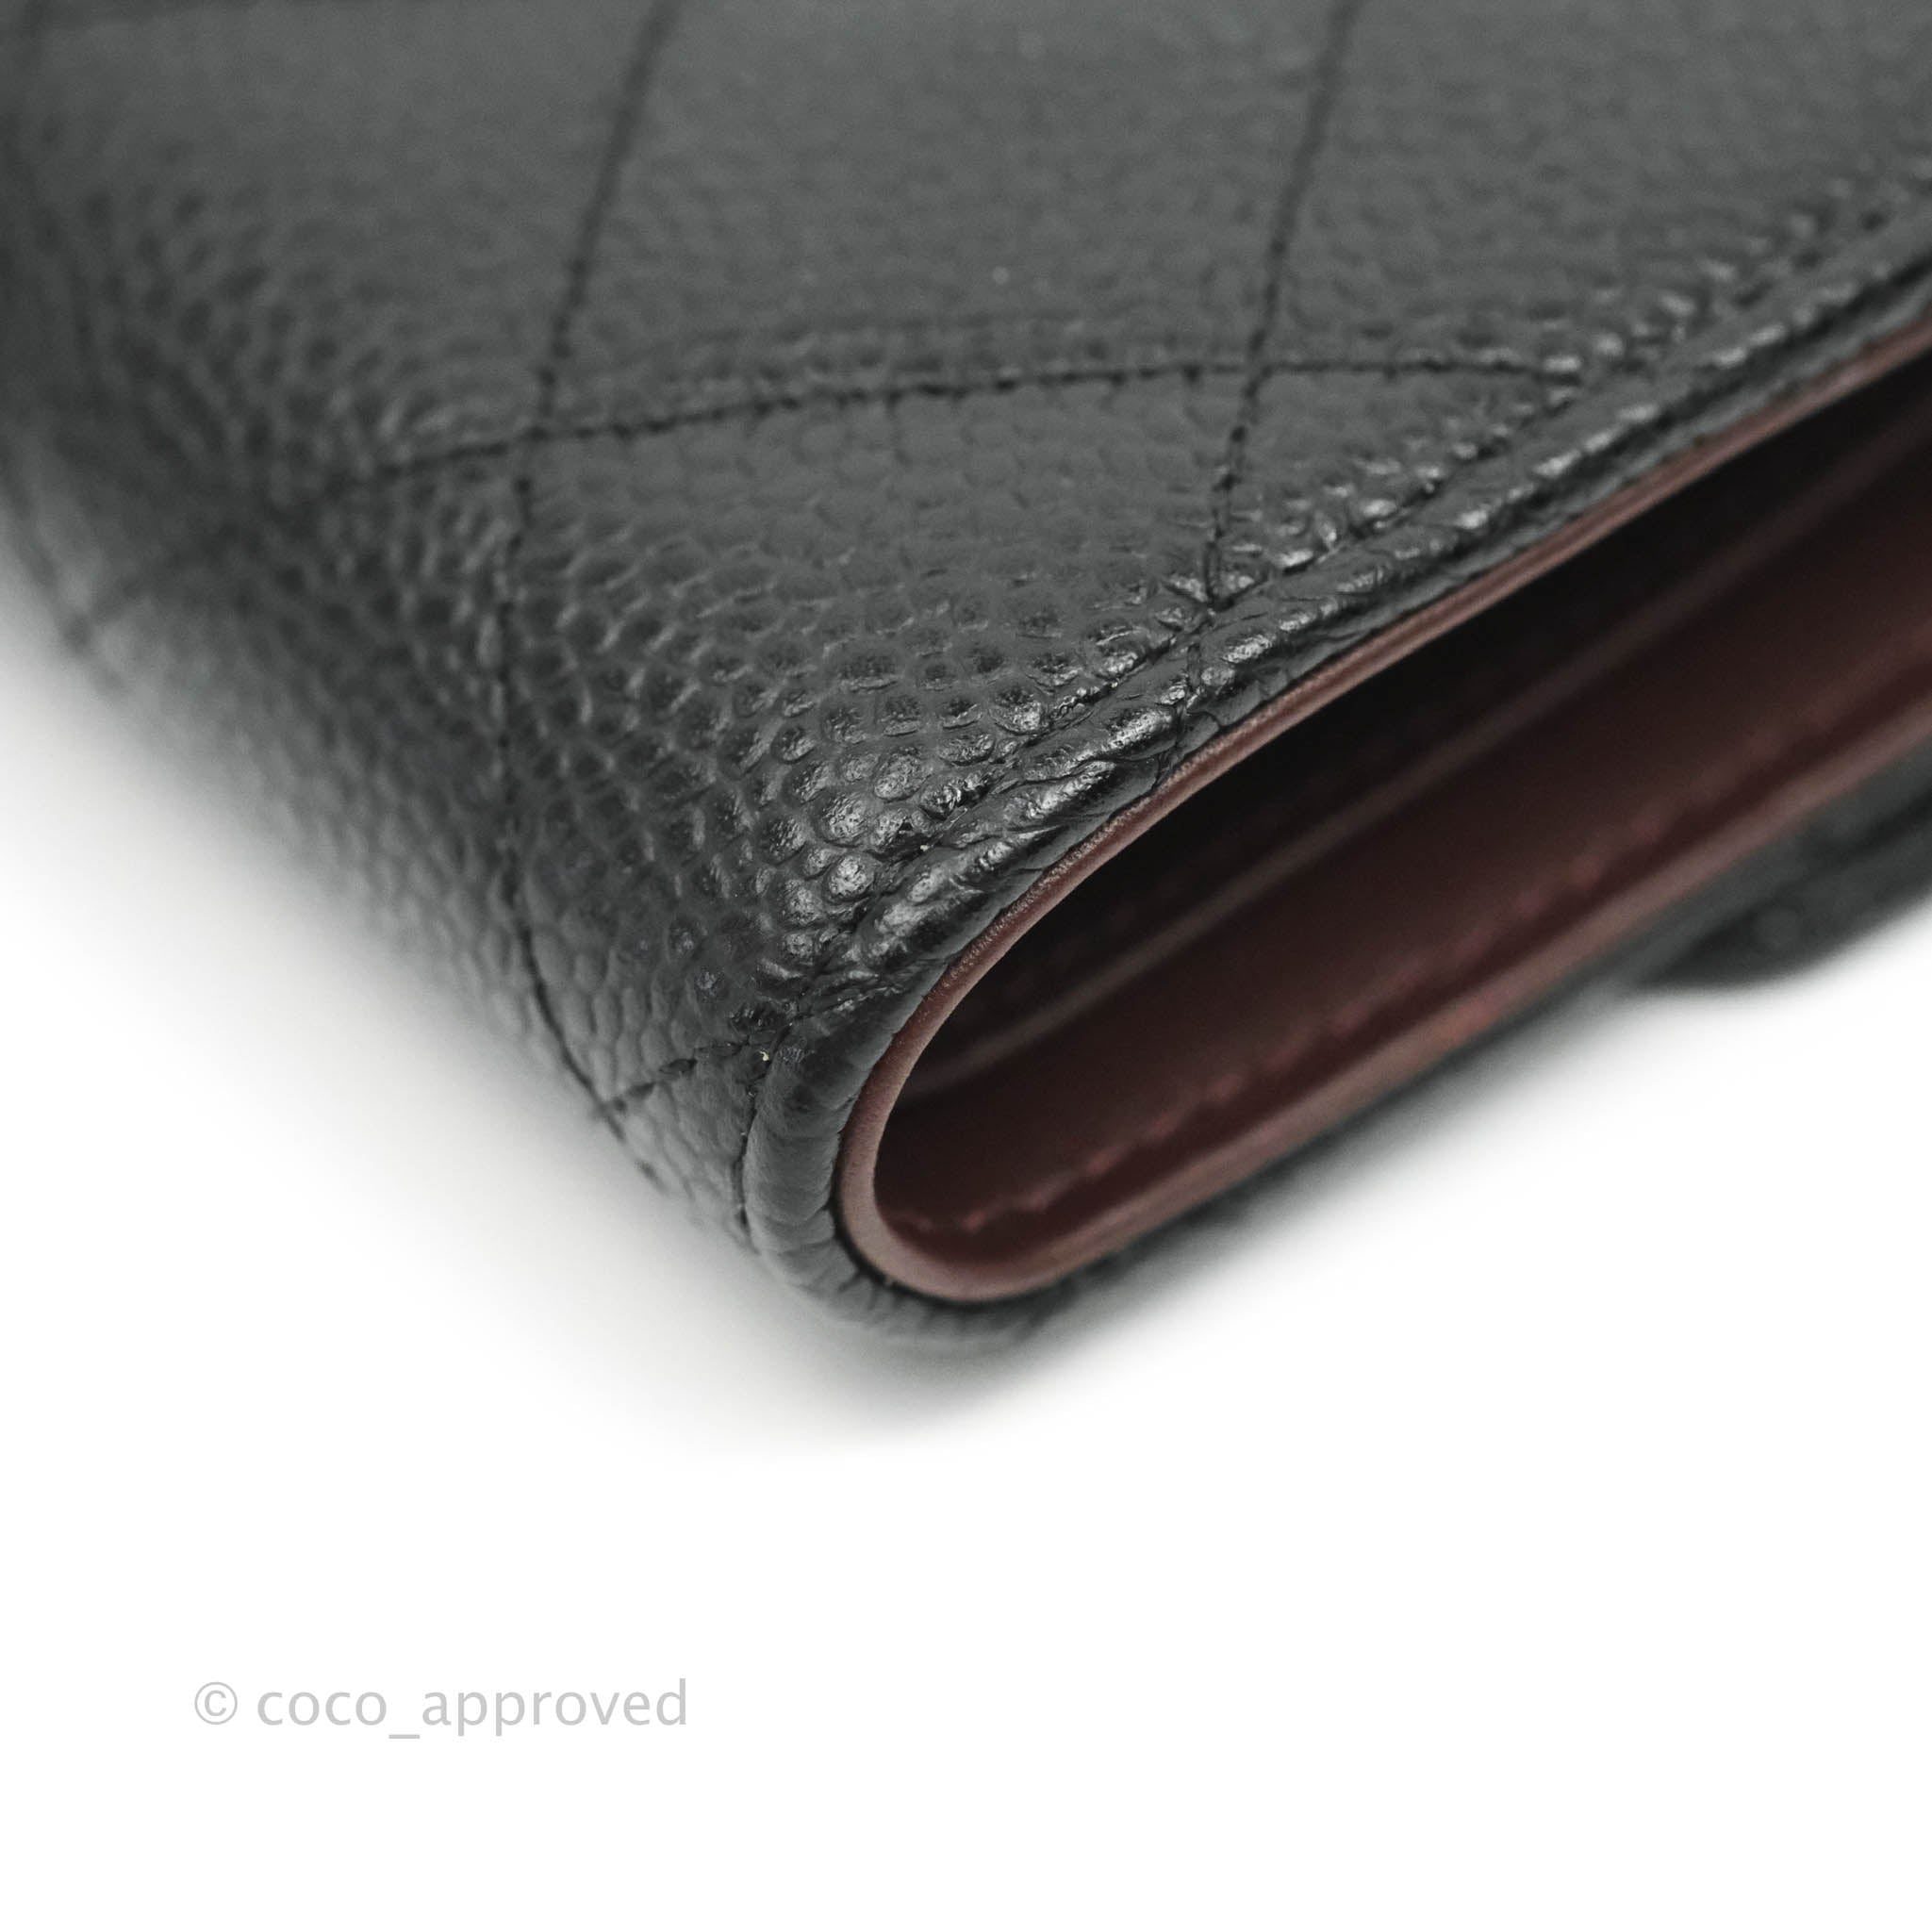 Chanel Classic Flap Wallet  11 x 3 x 18cm New, - Depop